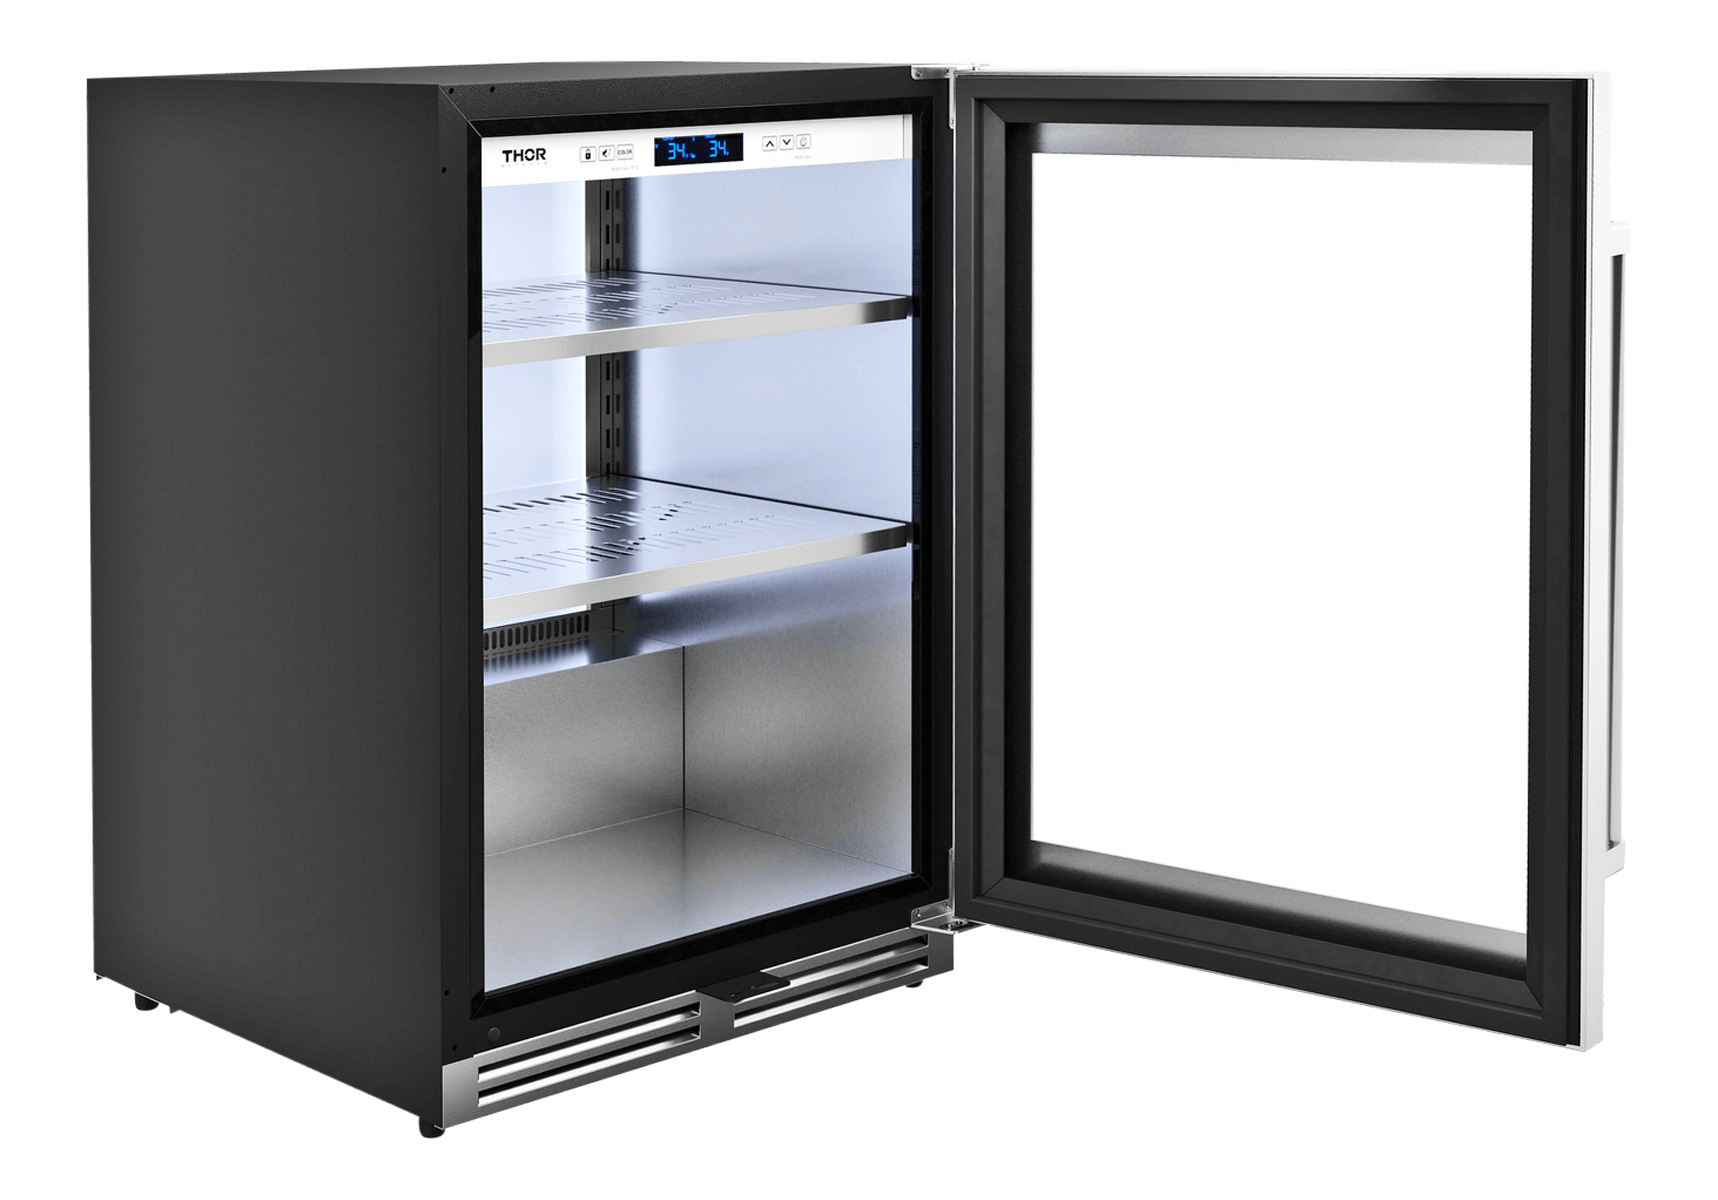 Thor Kitchen 24 Inch Professional Undercounter Beverage Cooler – Model Number TBR24U